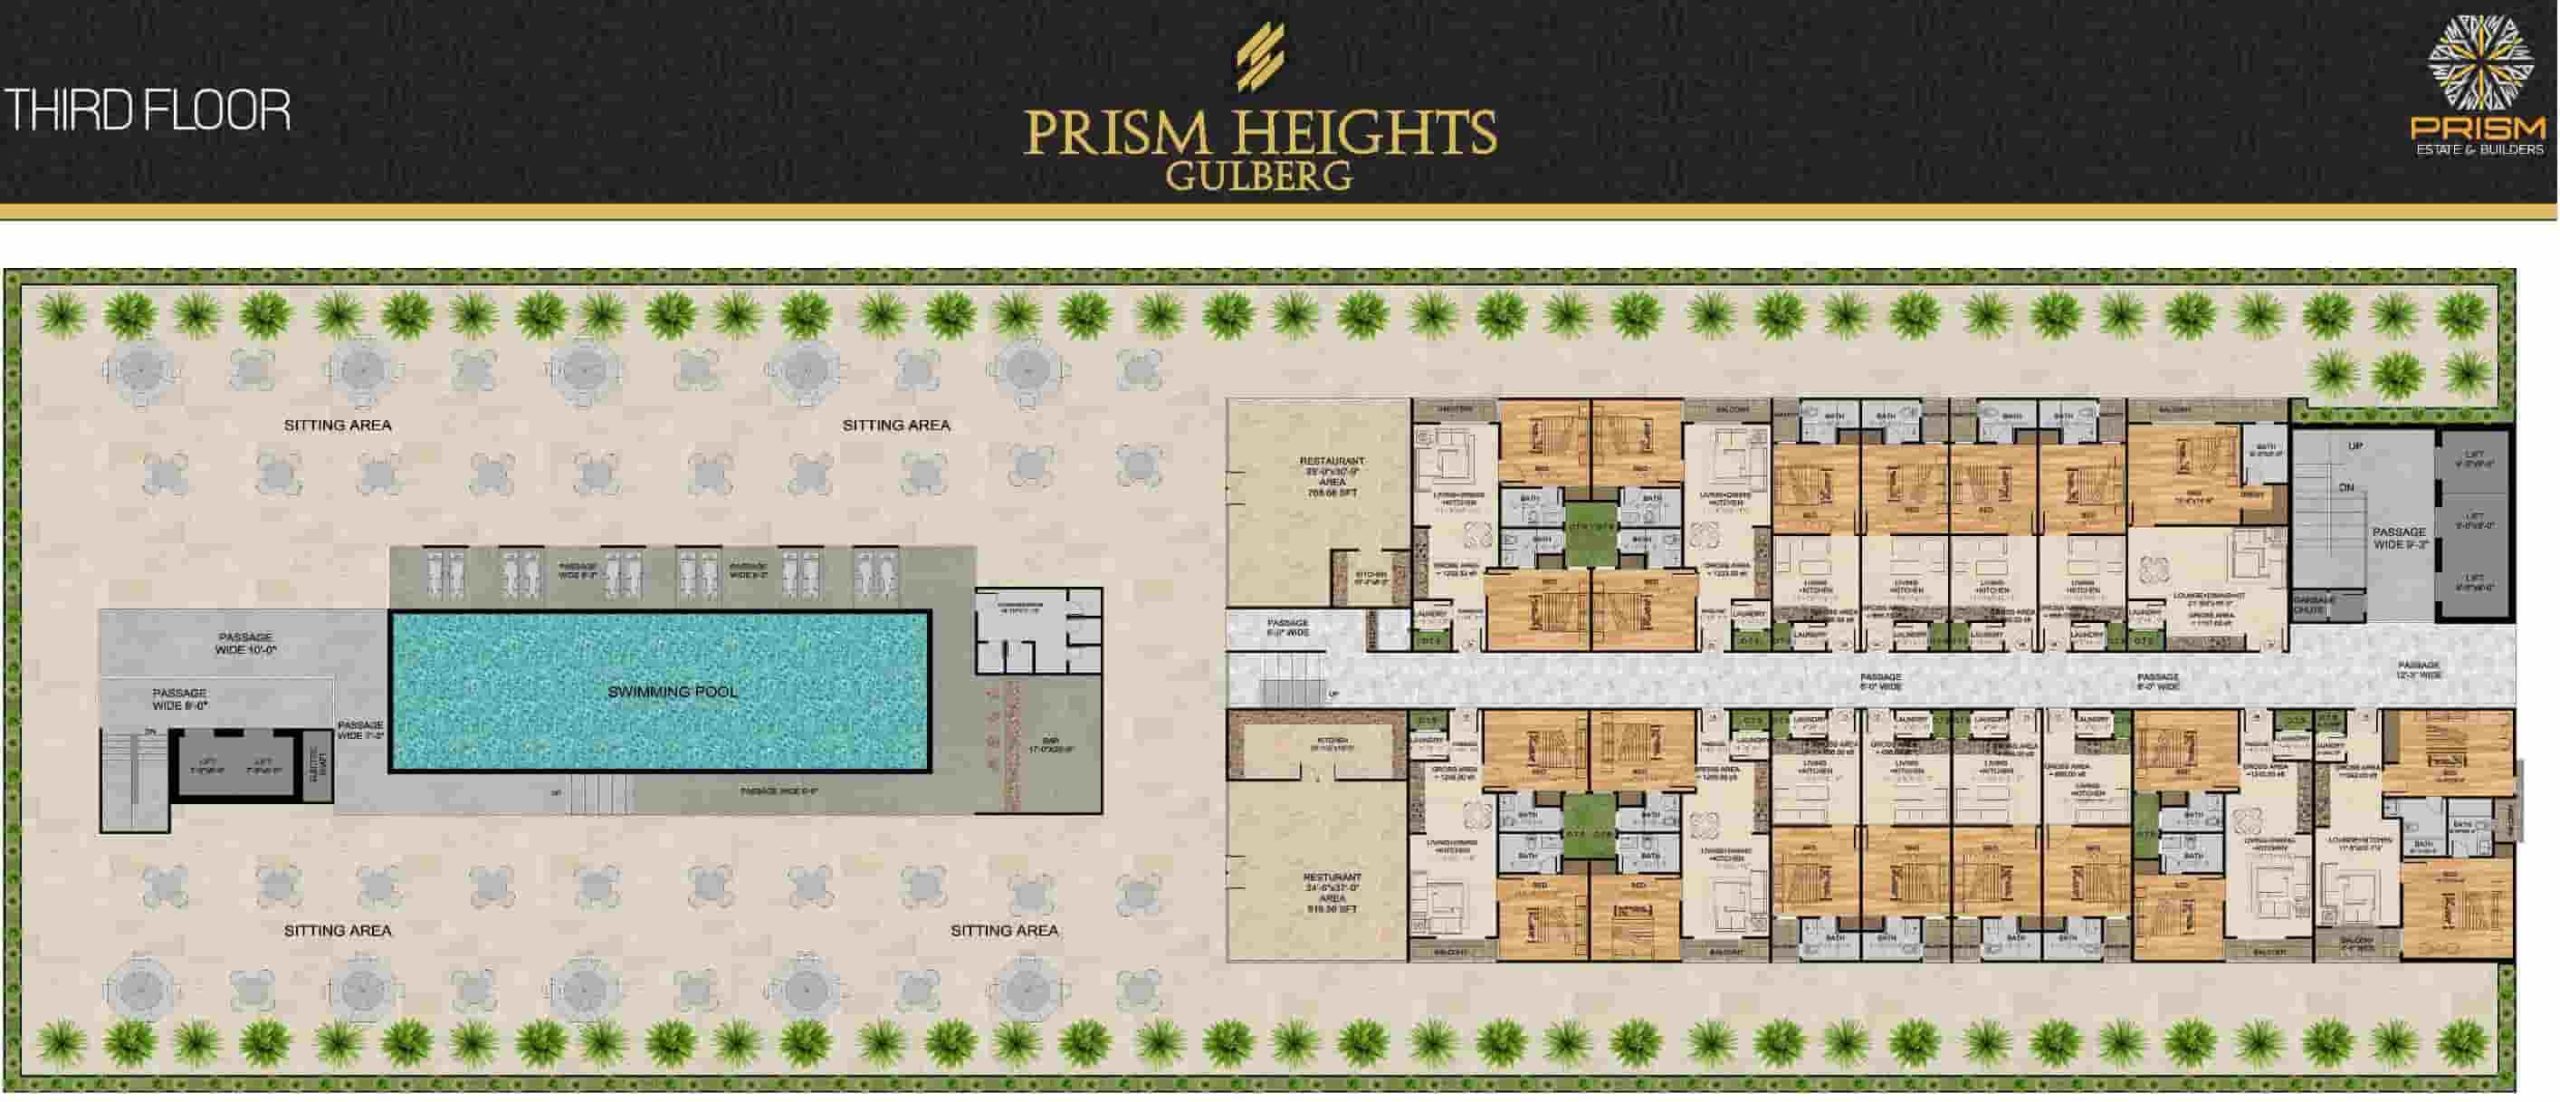 Prism Heights 3rd Floor Plan